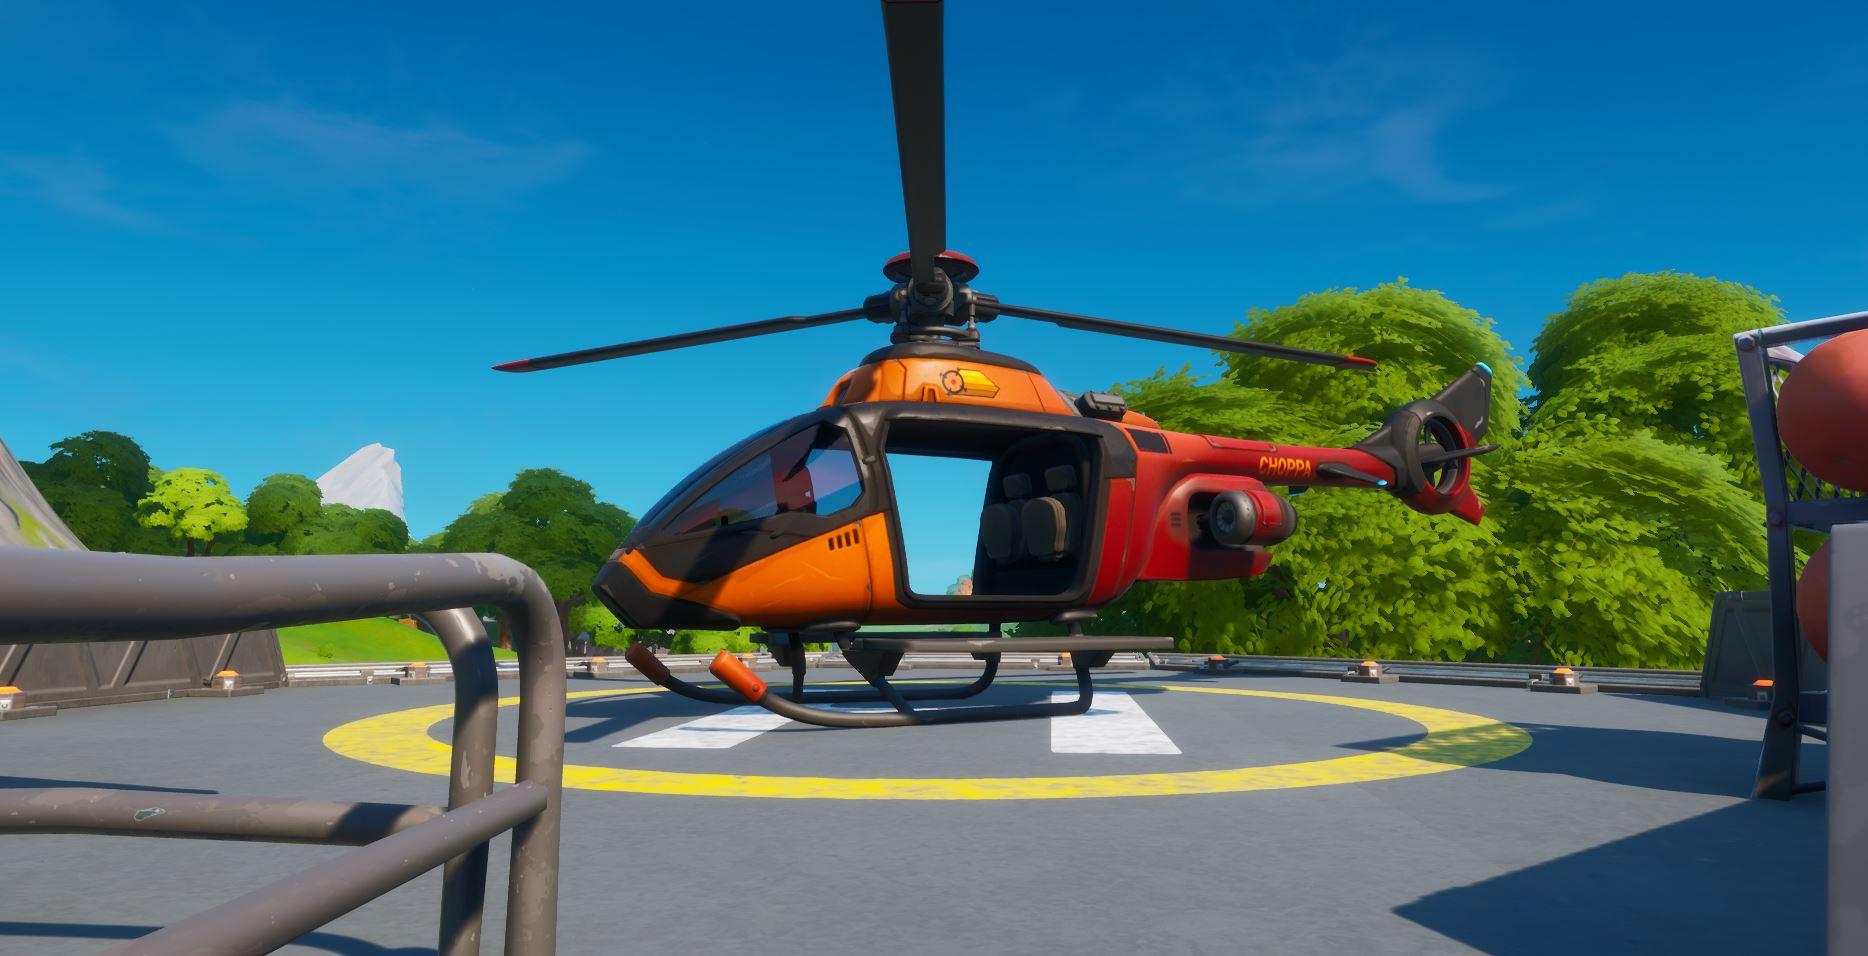 Choppa or helicopter in Fortnite